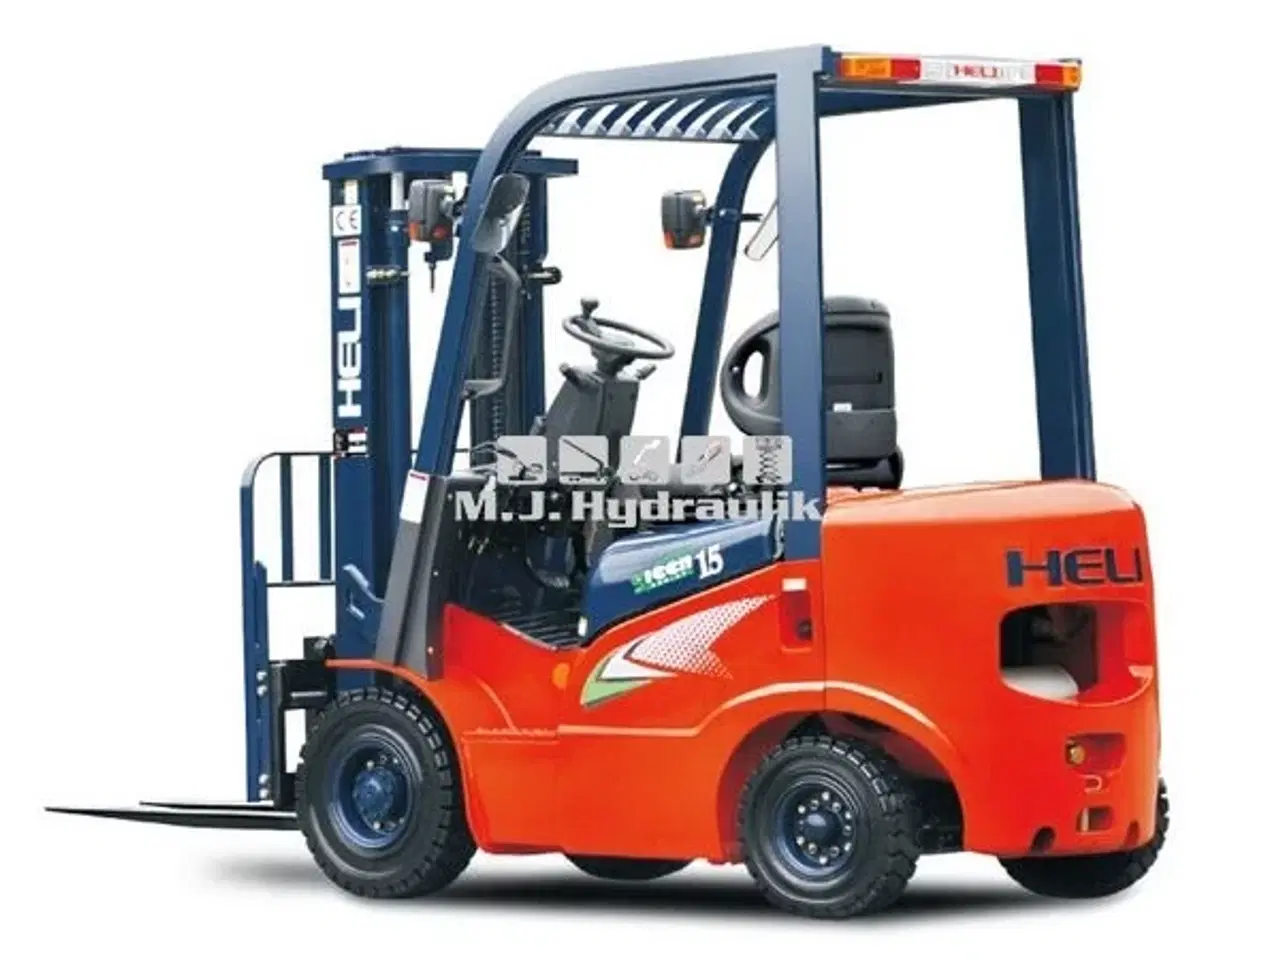 Billede 1 - Diesel-gaffeltruck - HELI CPCD10-18/CPQ(Y)D10-18 G-Serie